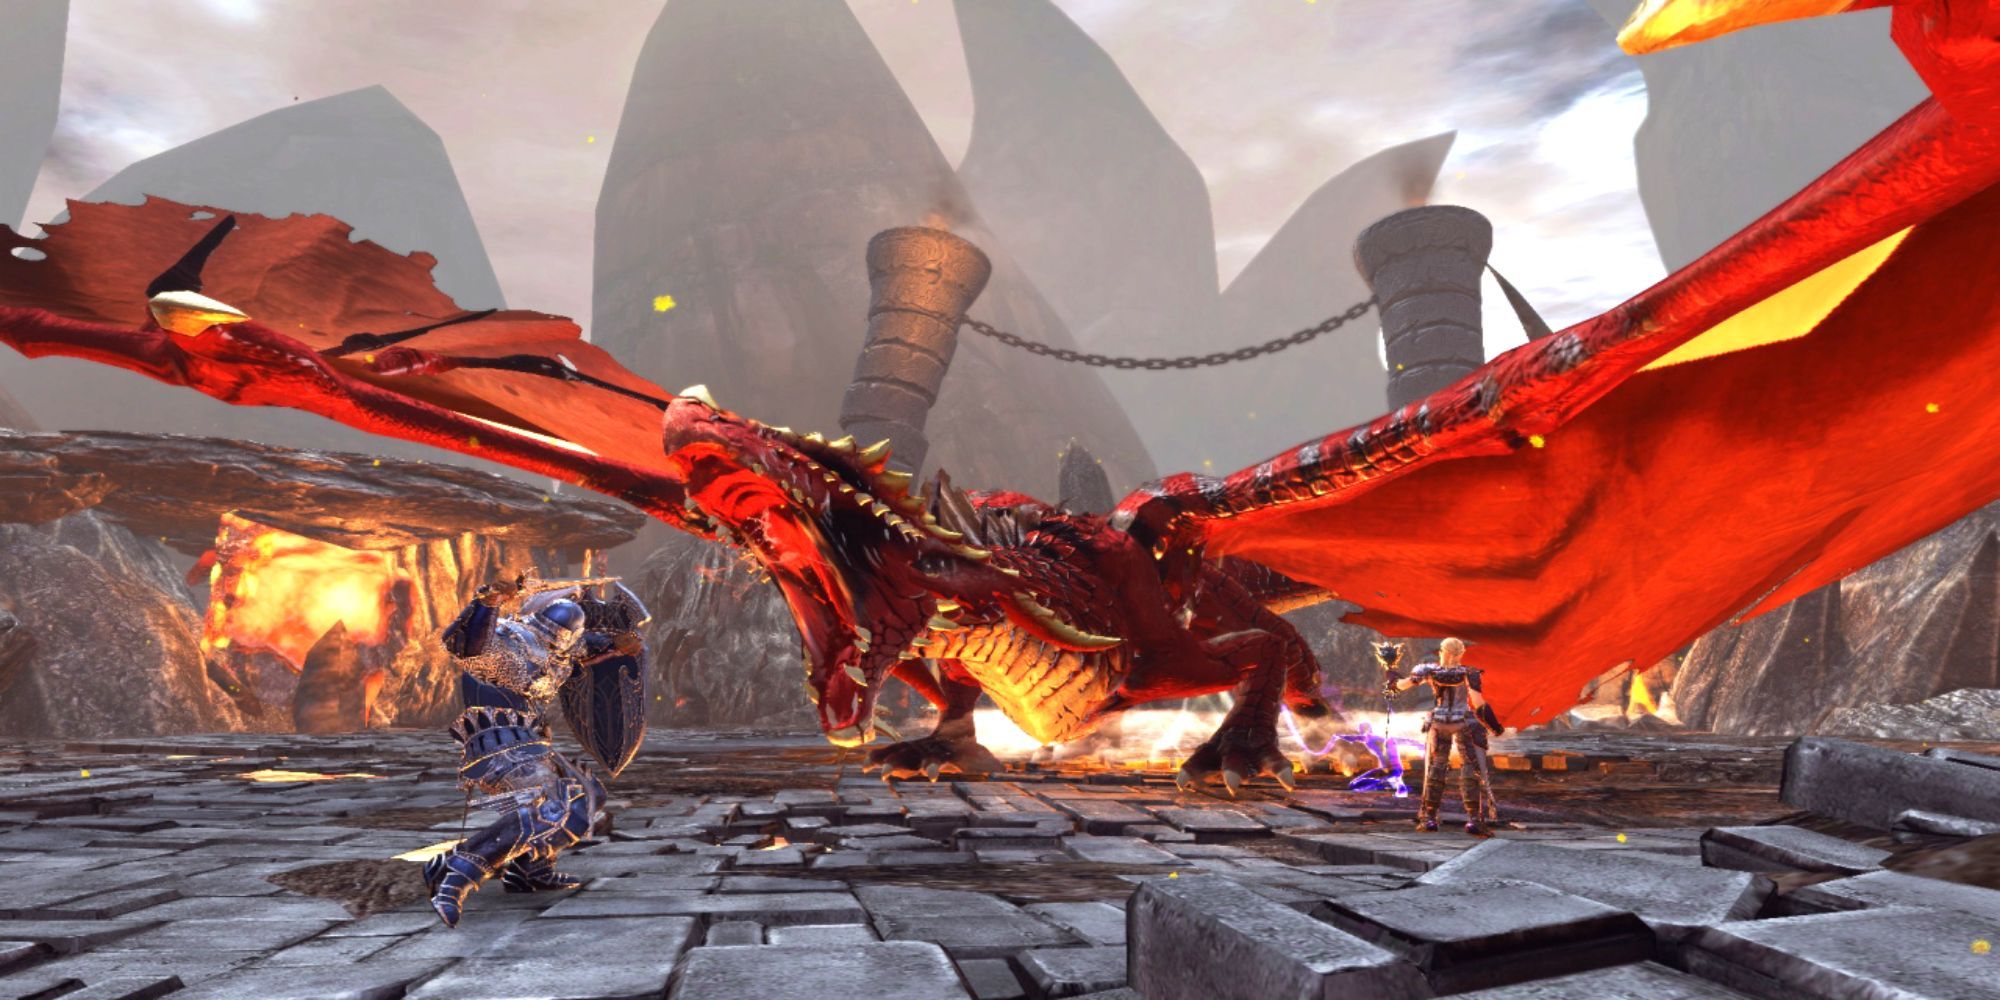 A fierce red dragon roaring as two adventurers prepare to battle it.